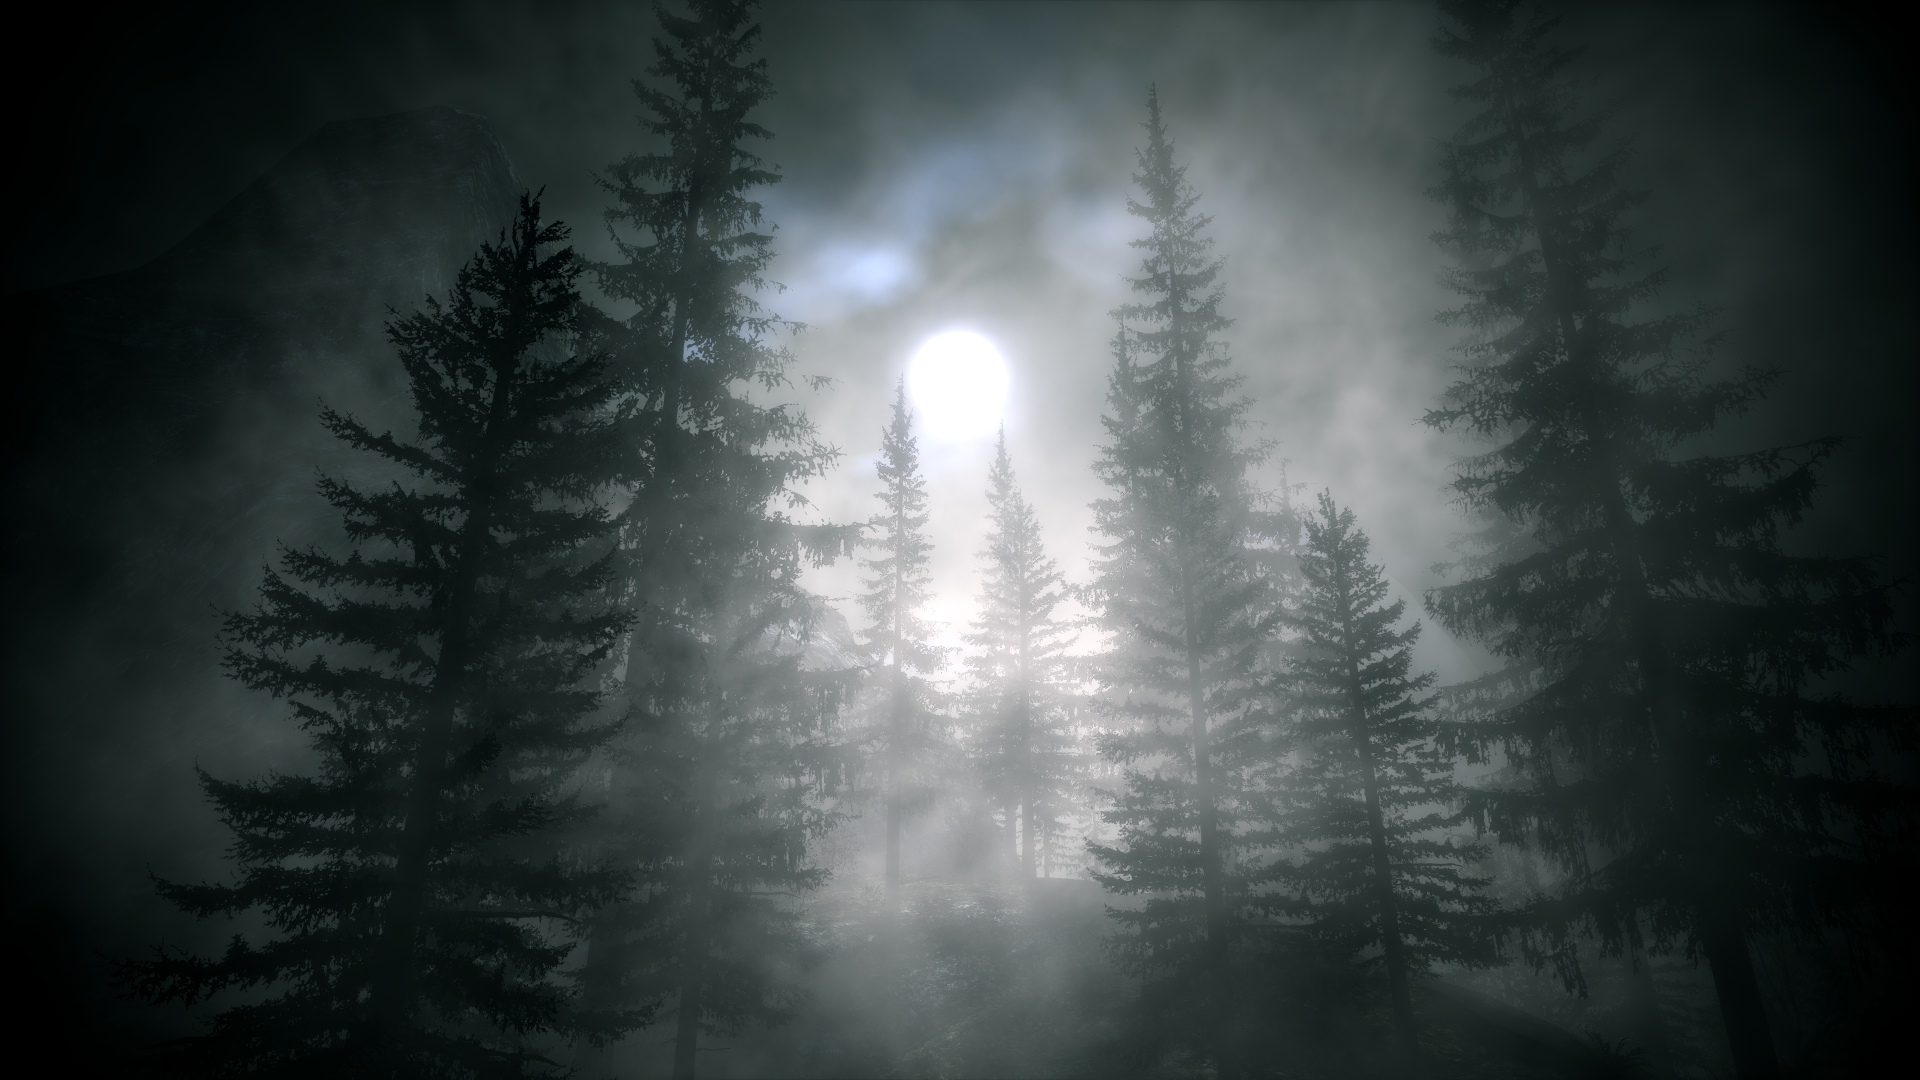 moonlight, artistic, nature, fog, forest, tree